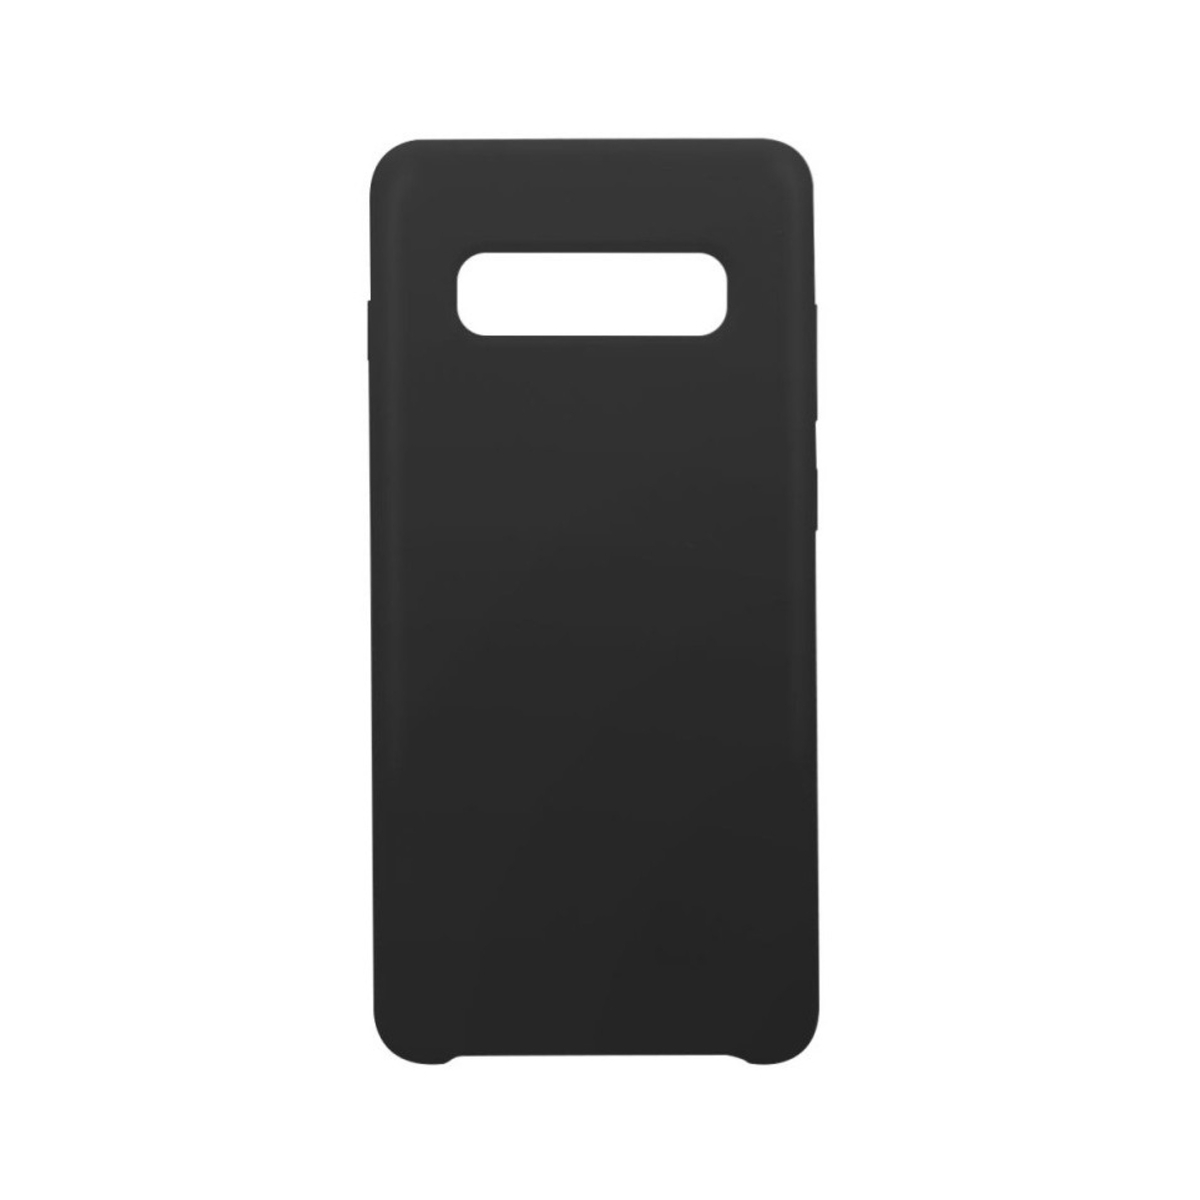 Чехол-накладка Devia Nature Series Silicon Case для смартфона Samsung Galaxy S10+, черный